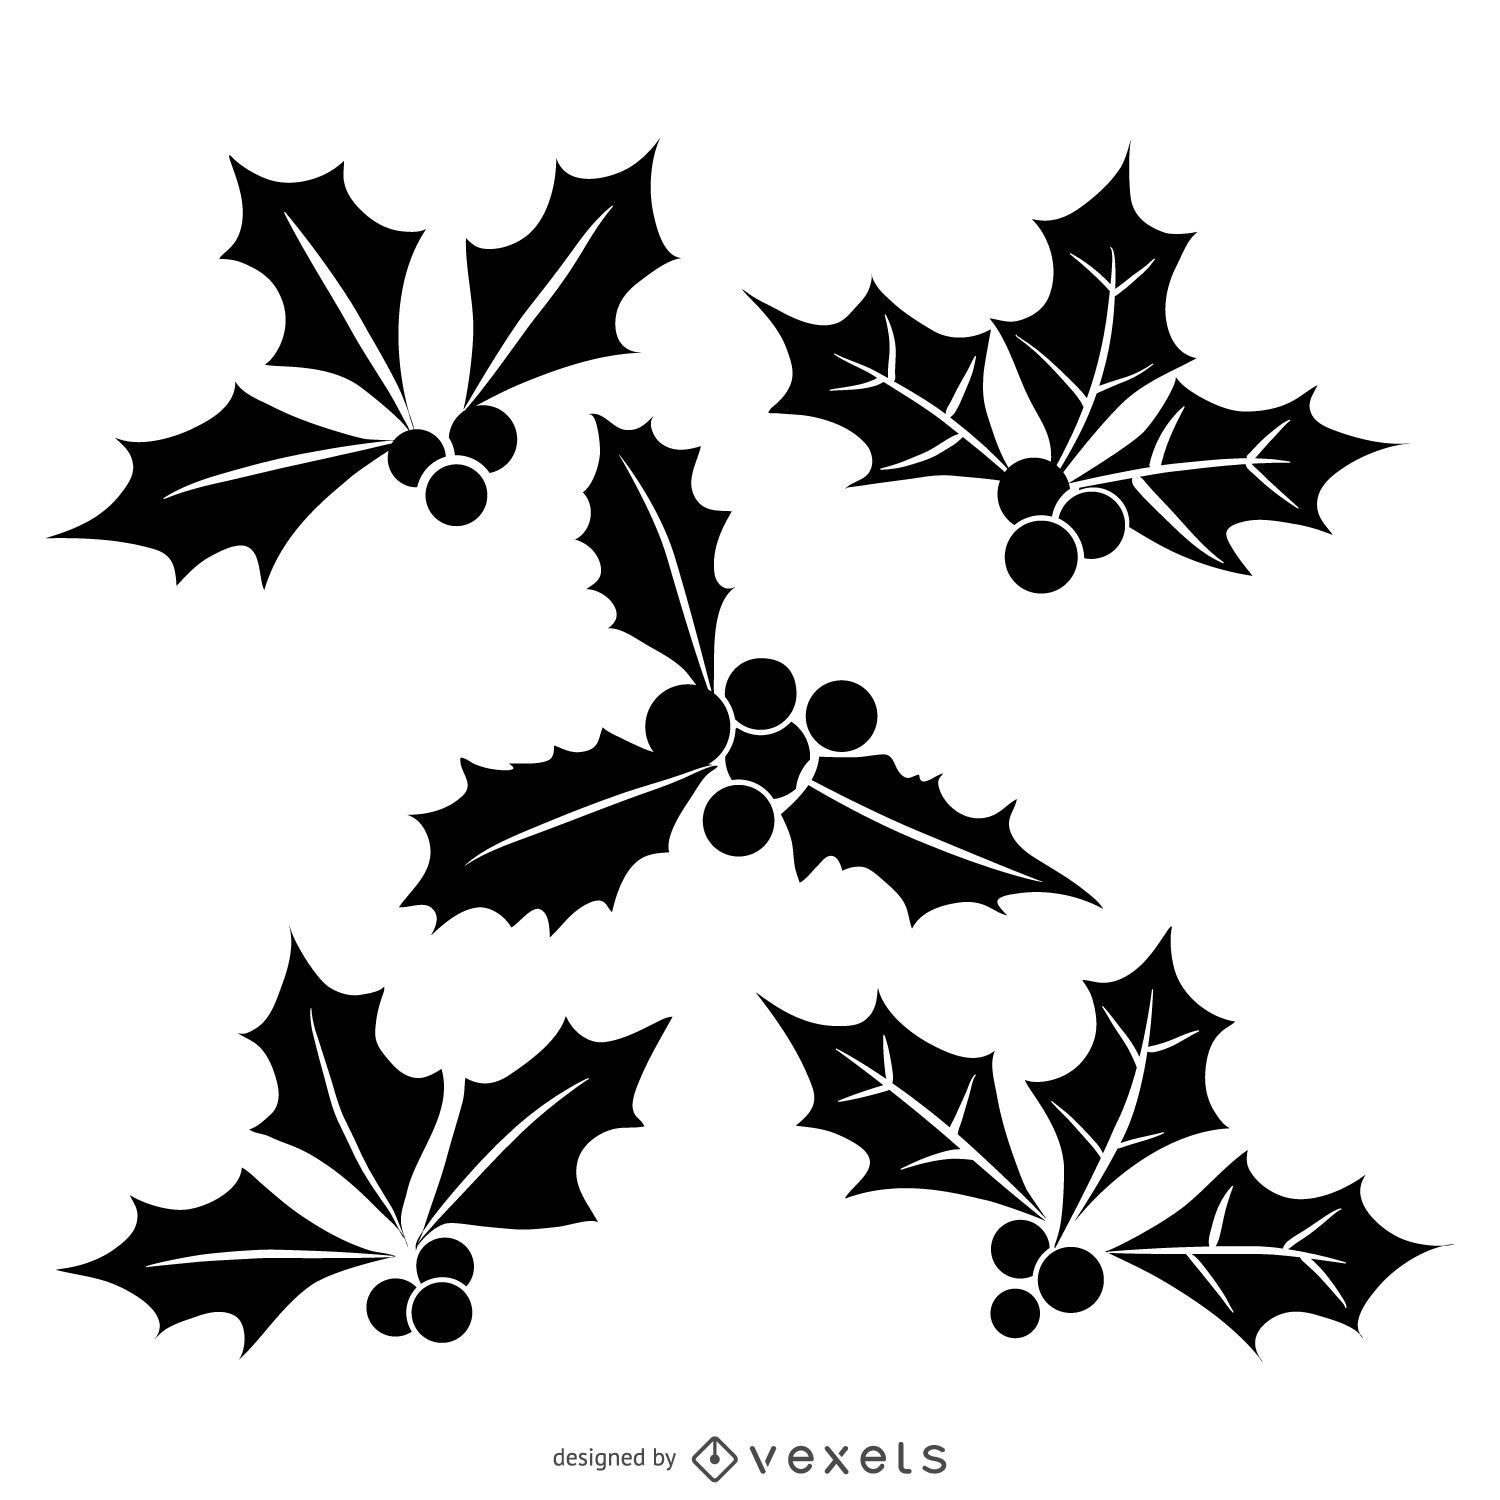 Isolated Christmas mistletoe silhouette set